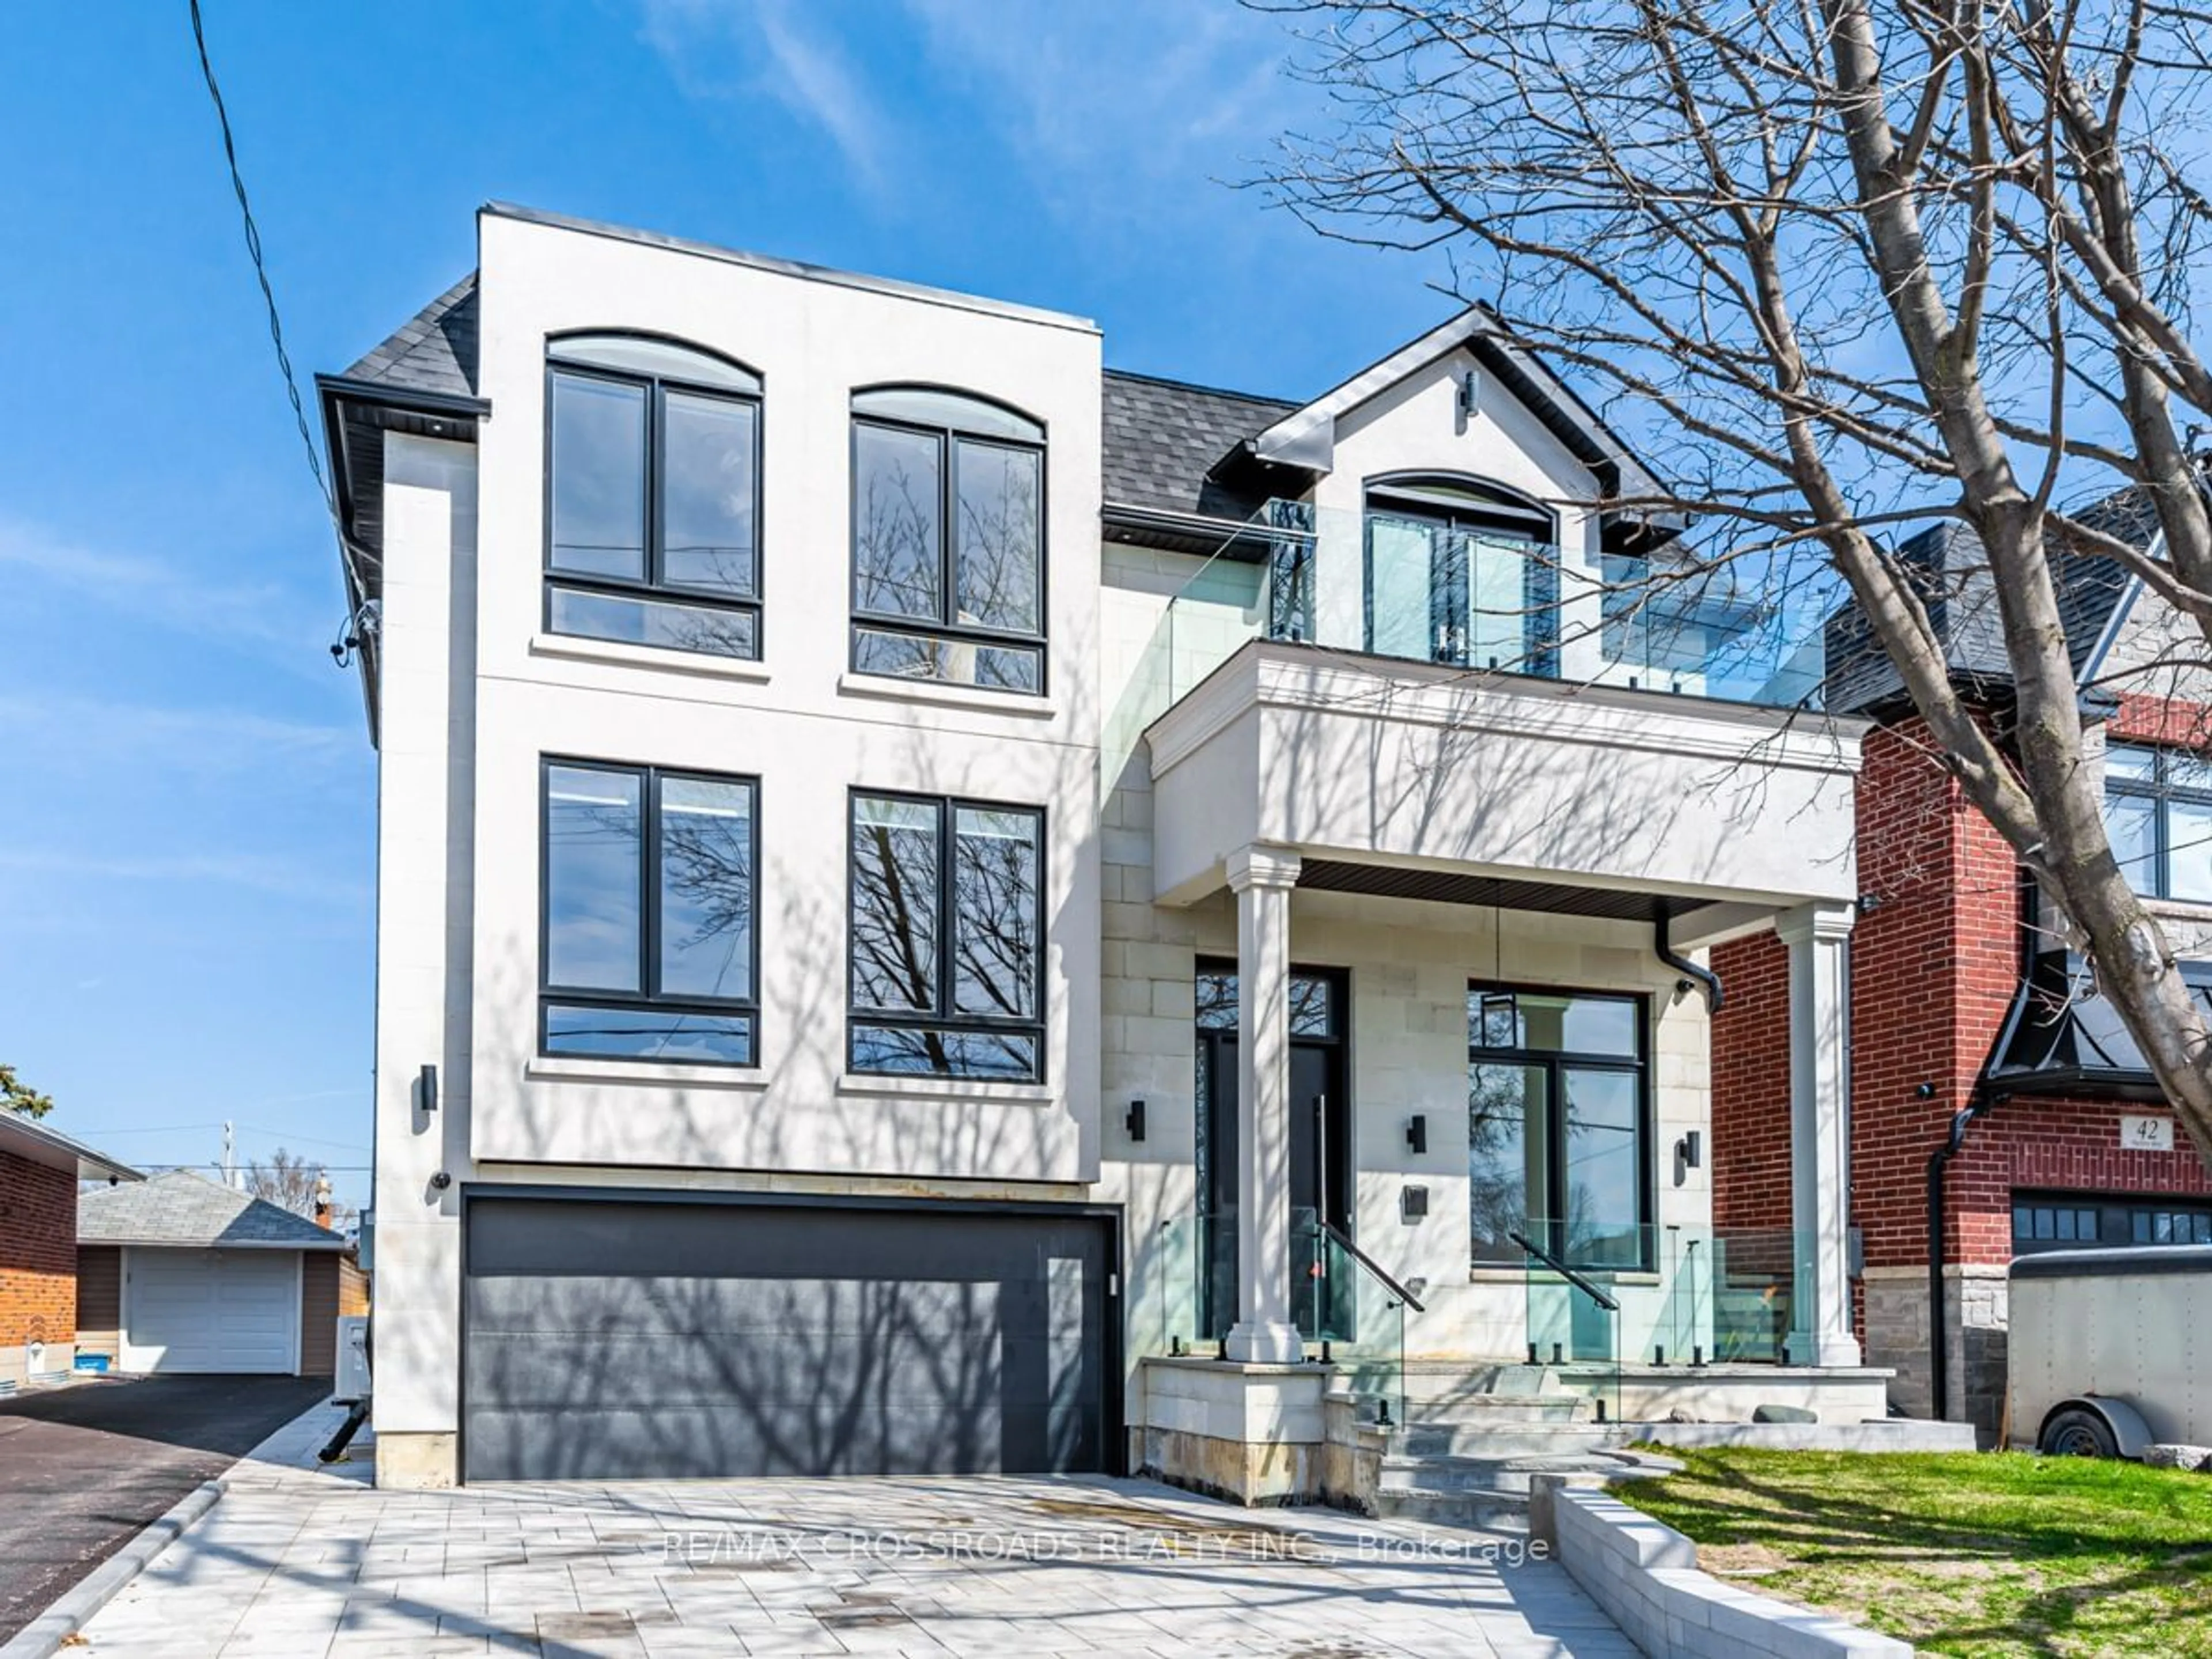 Home with brick exterior material for 40 Pachino Blvd, Toronto Ontario M1R 4J5